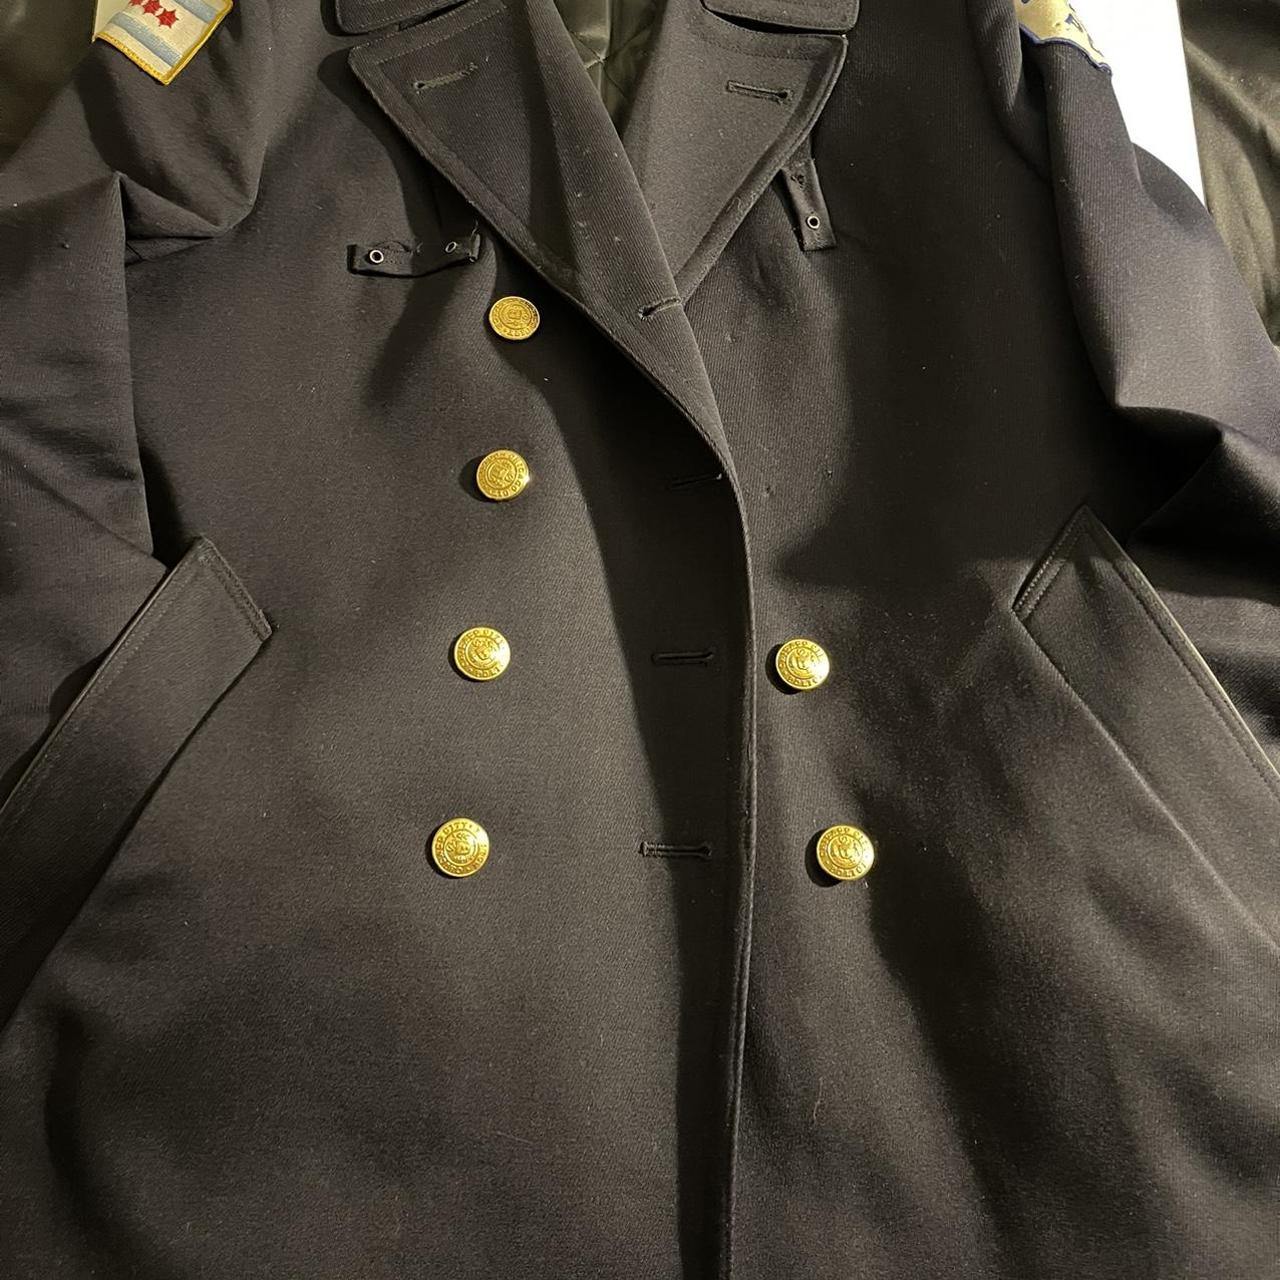 Chicago police graduation jacket 1980s #military... - Depop